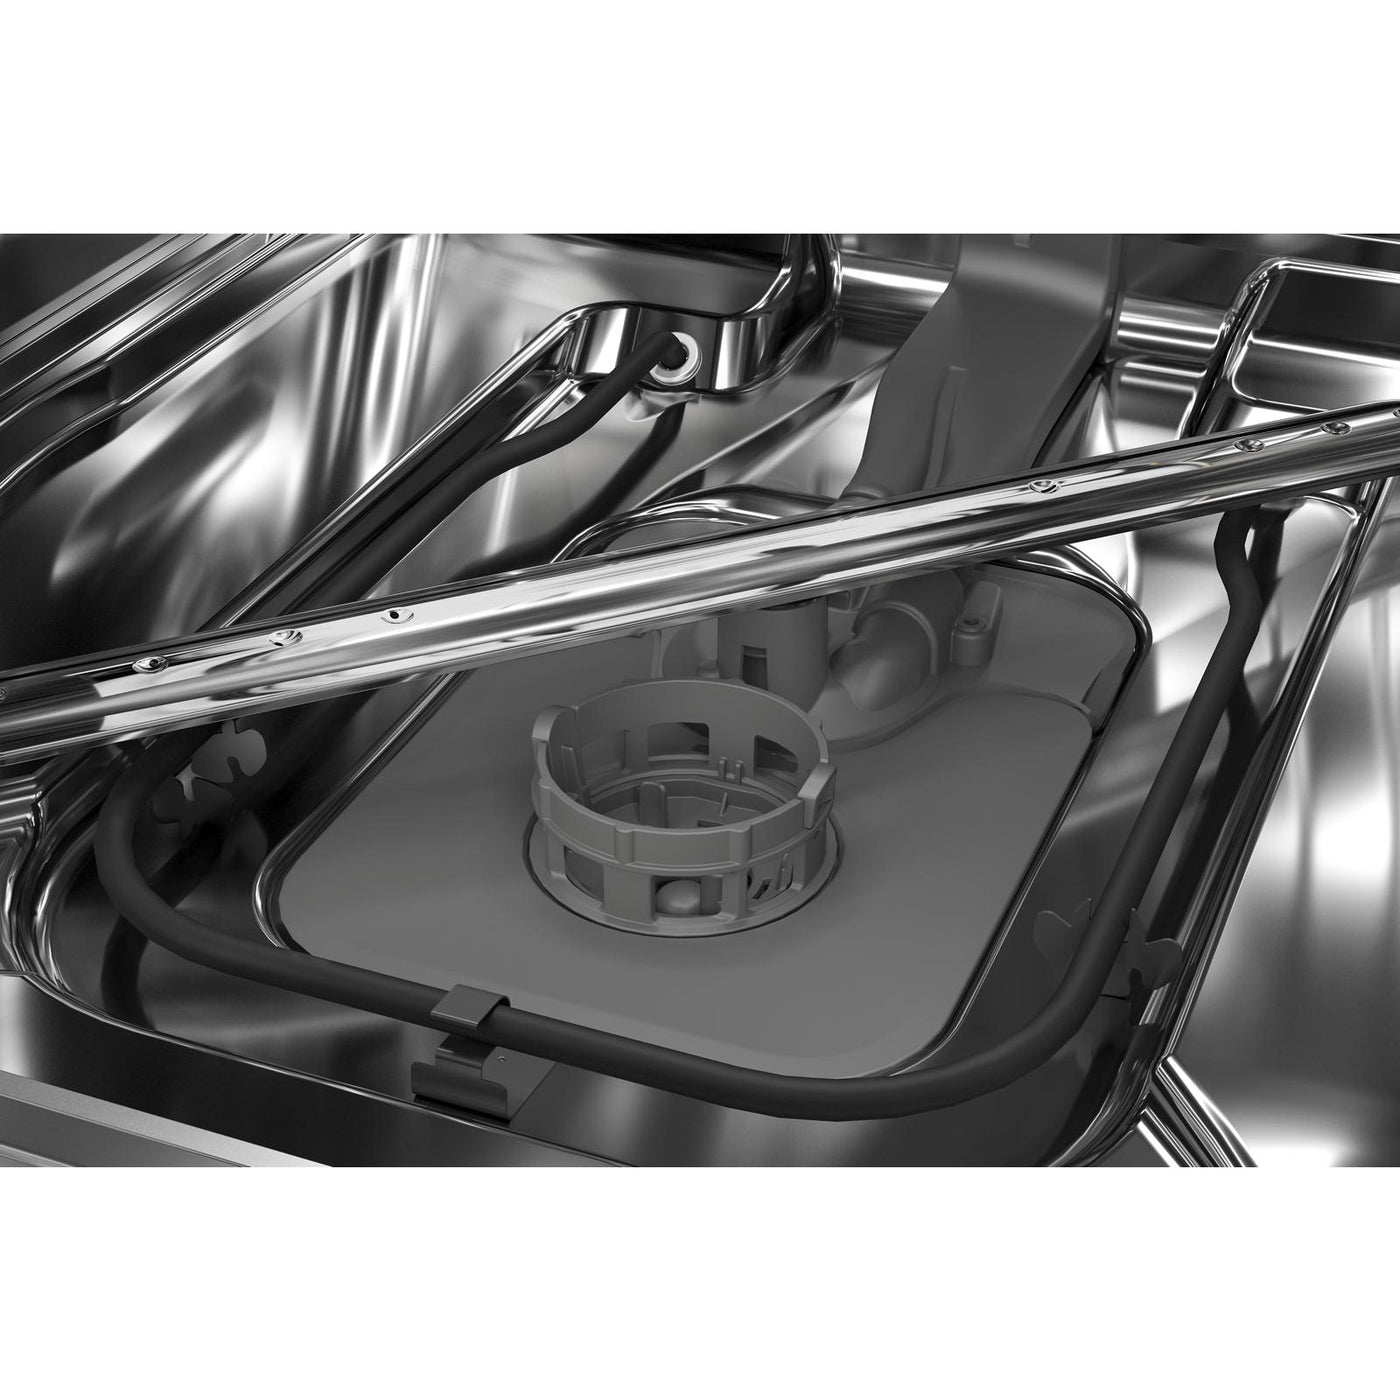 KitchenAid 24" PrintShield Stainless Dishwasher with Third Rack (39 dBA) - KDTE204KPS